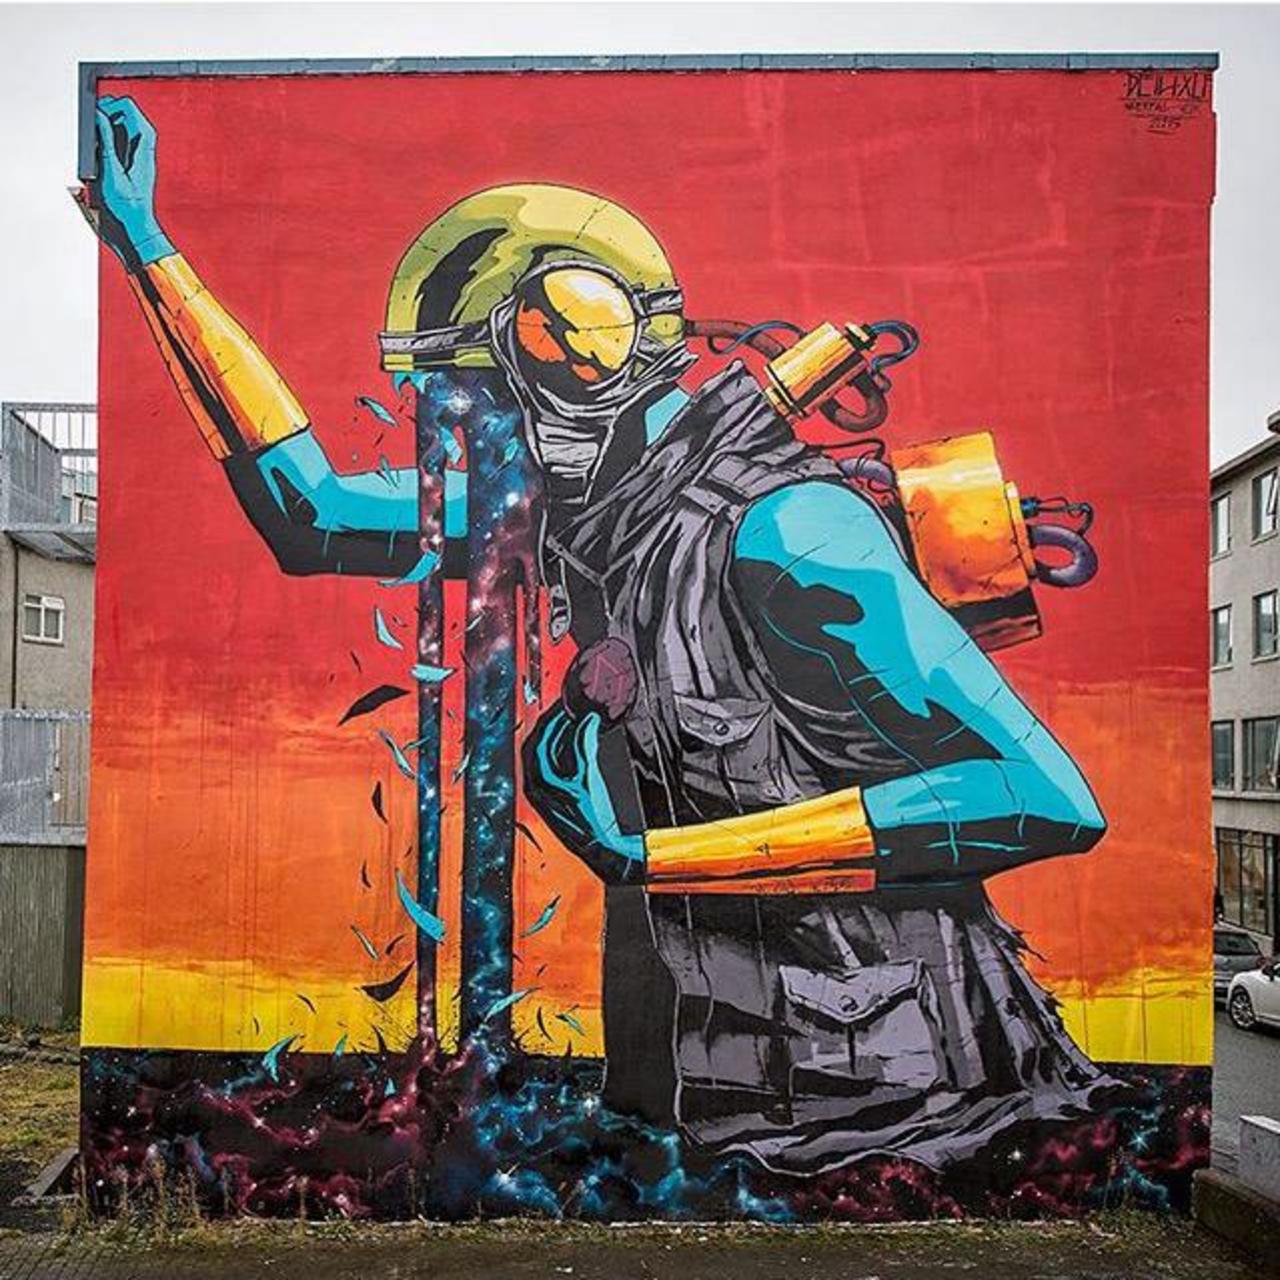 RT belilac "RT belilac "RT belilac "Street Art by Deih in Reykjavik 

#art #graffiti #mural #streetart https://t.co/FuDS40qc0T"""